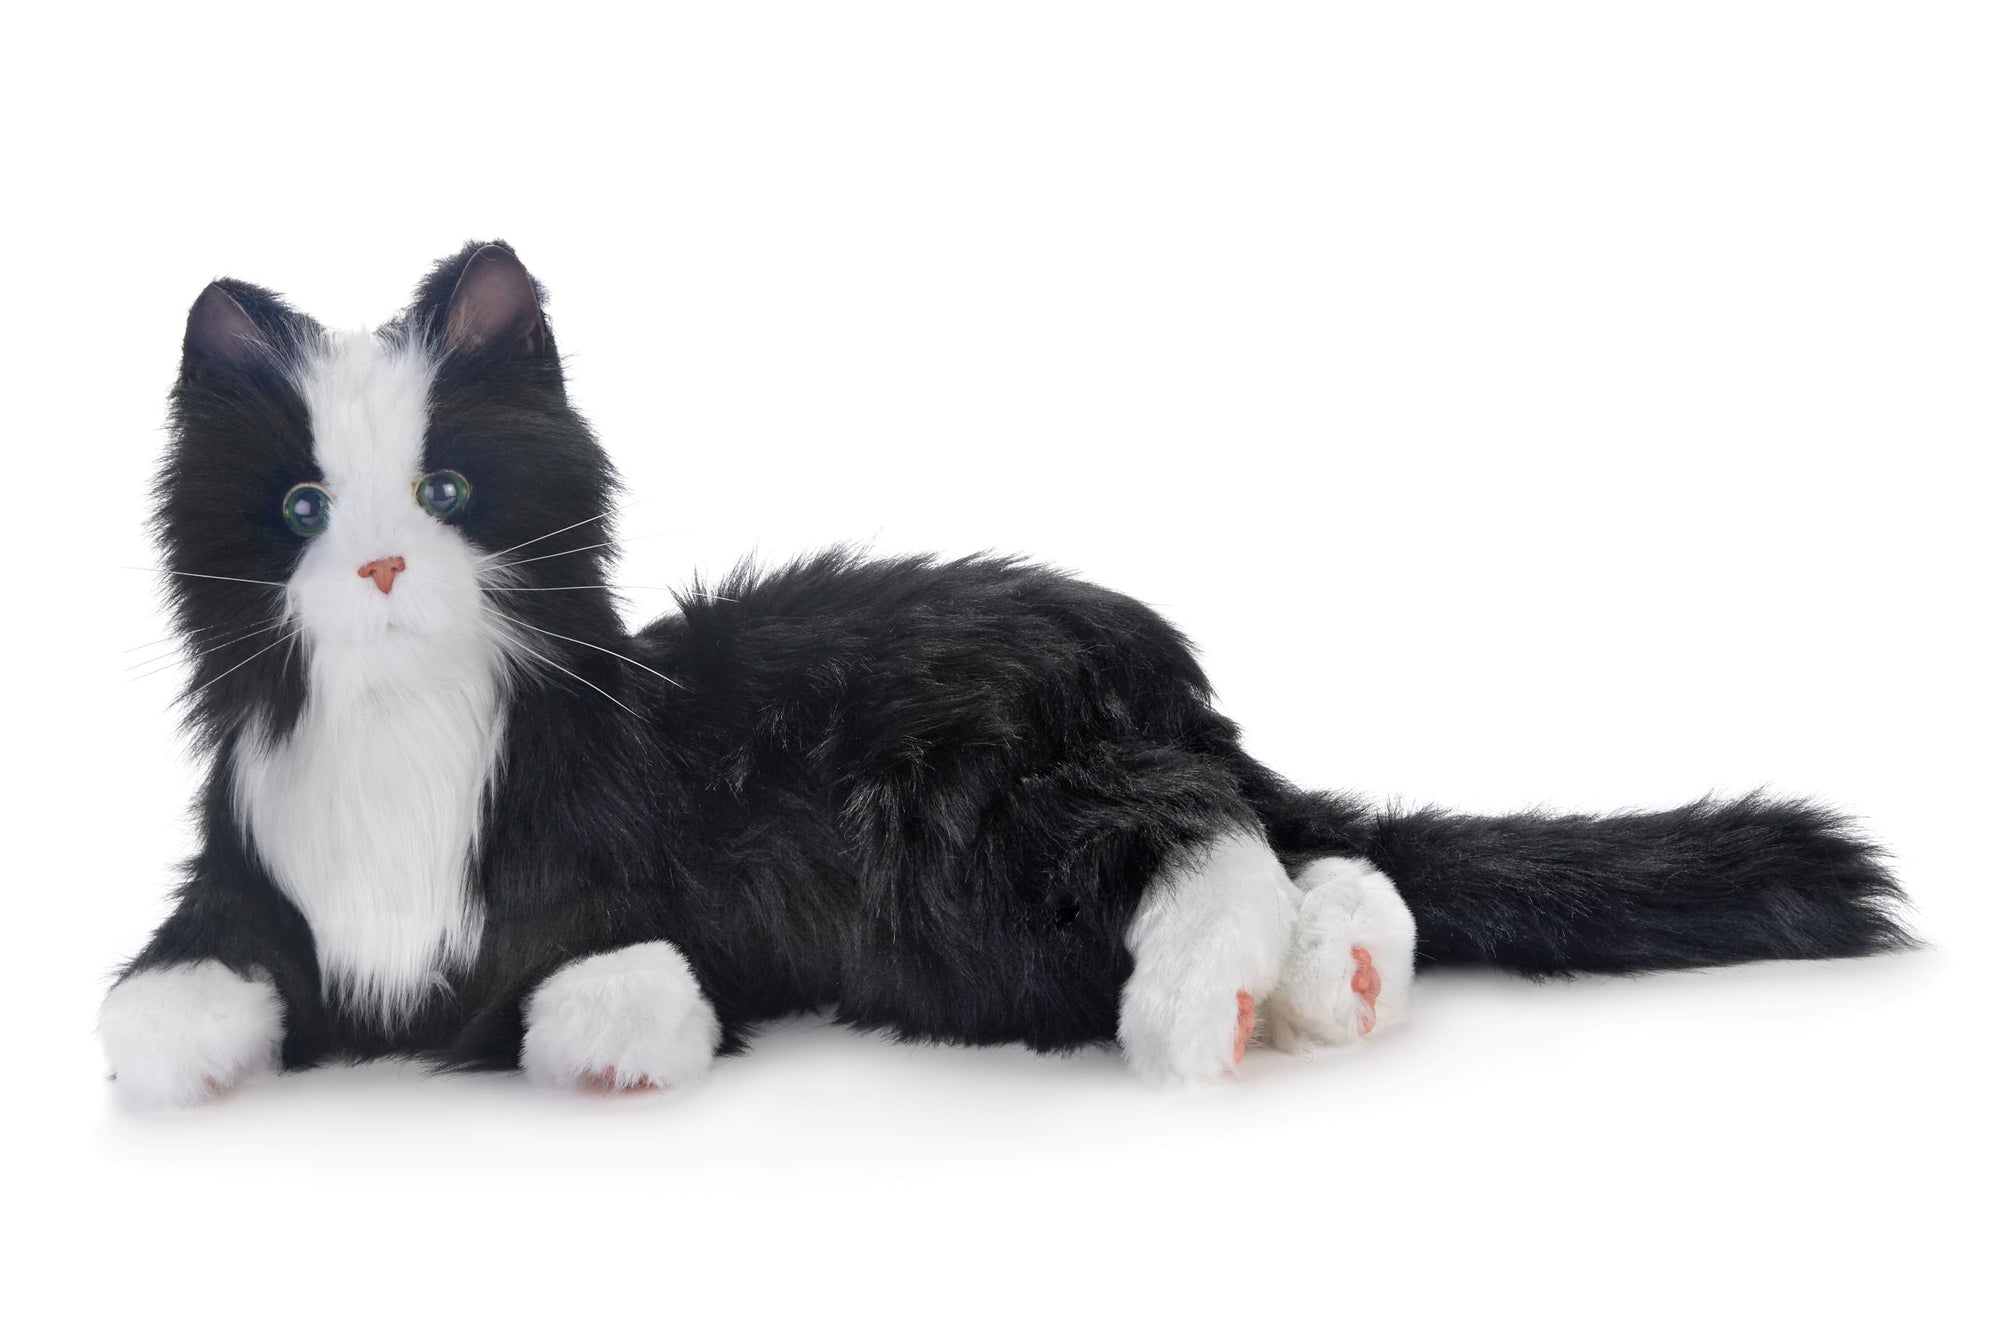 Black and white cat robotic companion pet